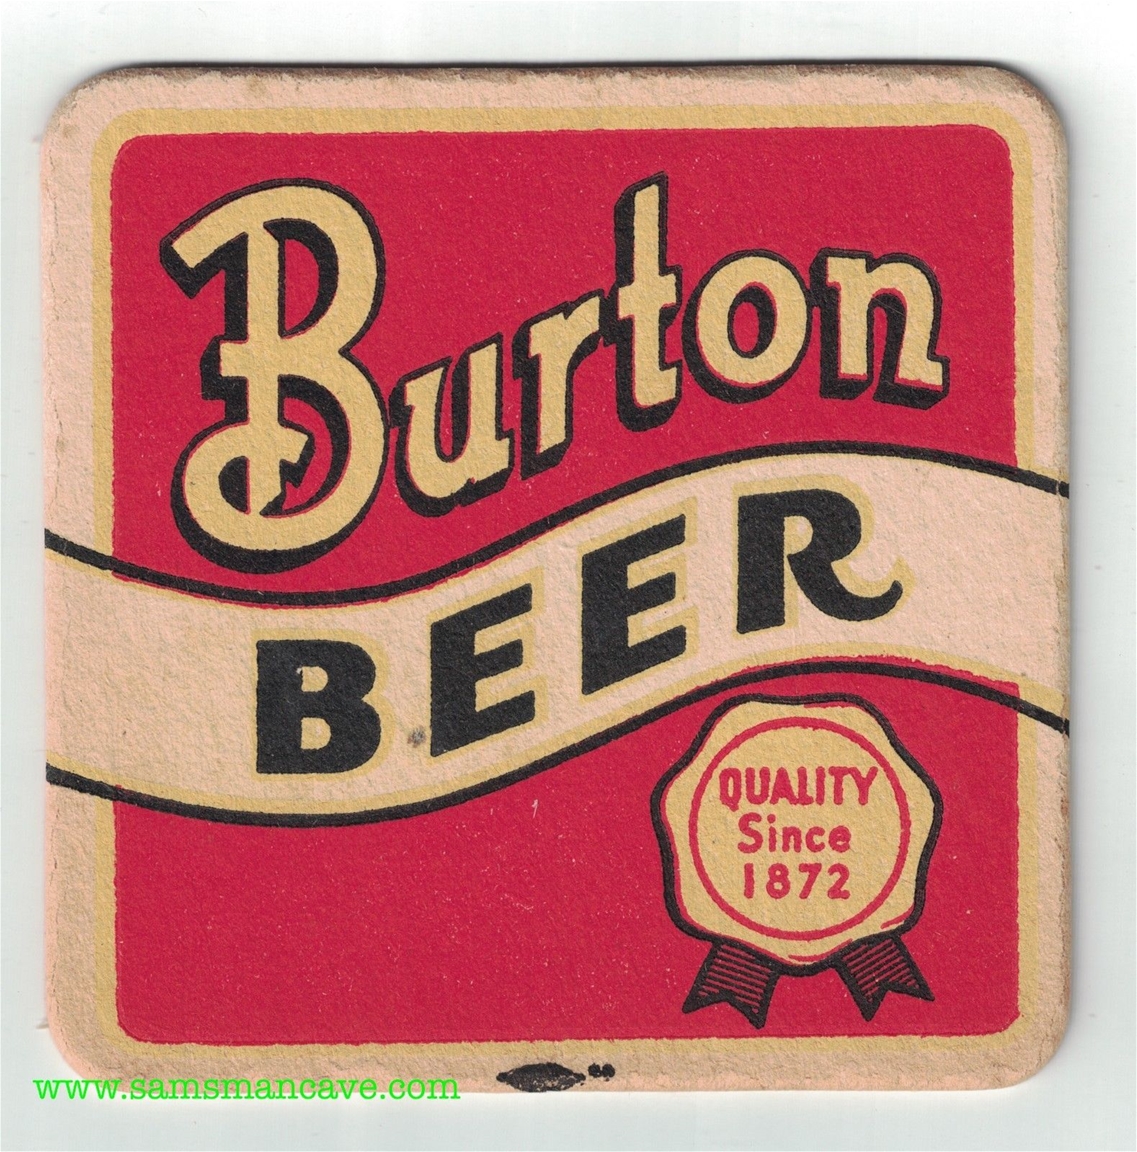 Burton Beer Coaster